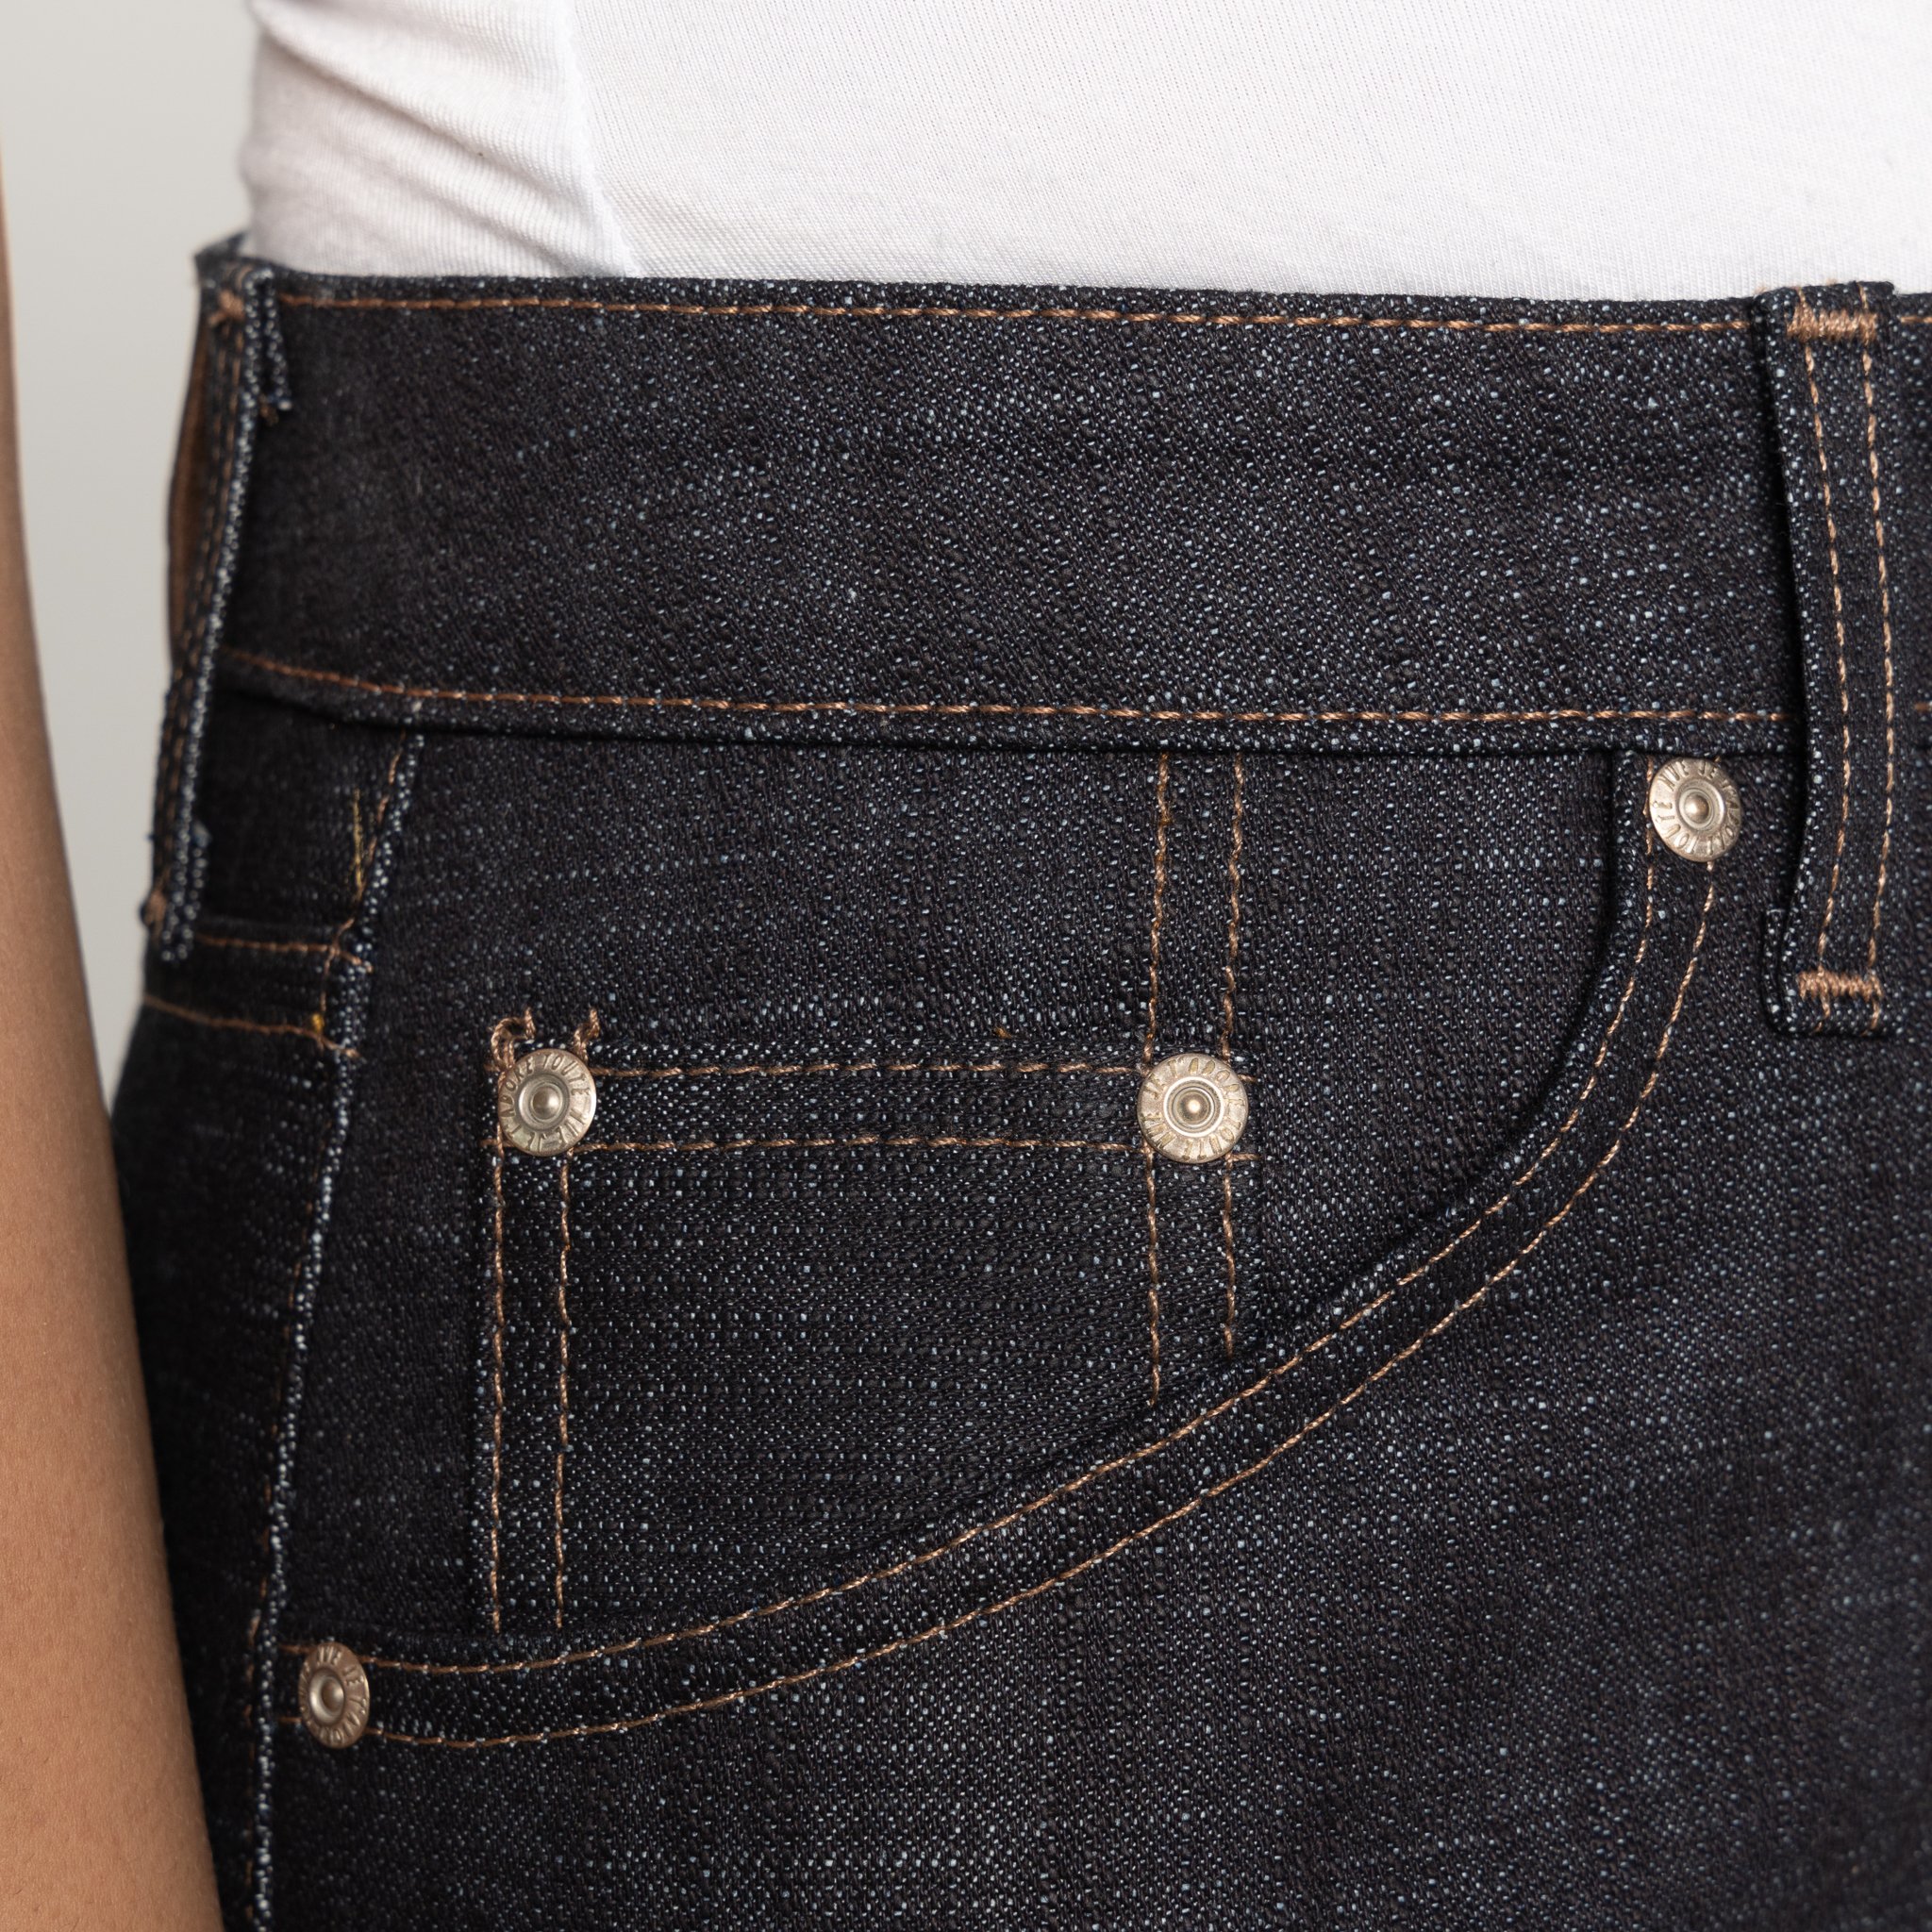  Women’s Broken Twill Slub Stretch Selvedge Jeans 